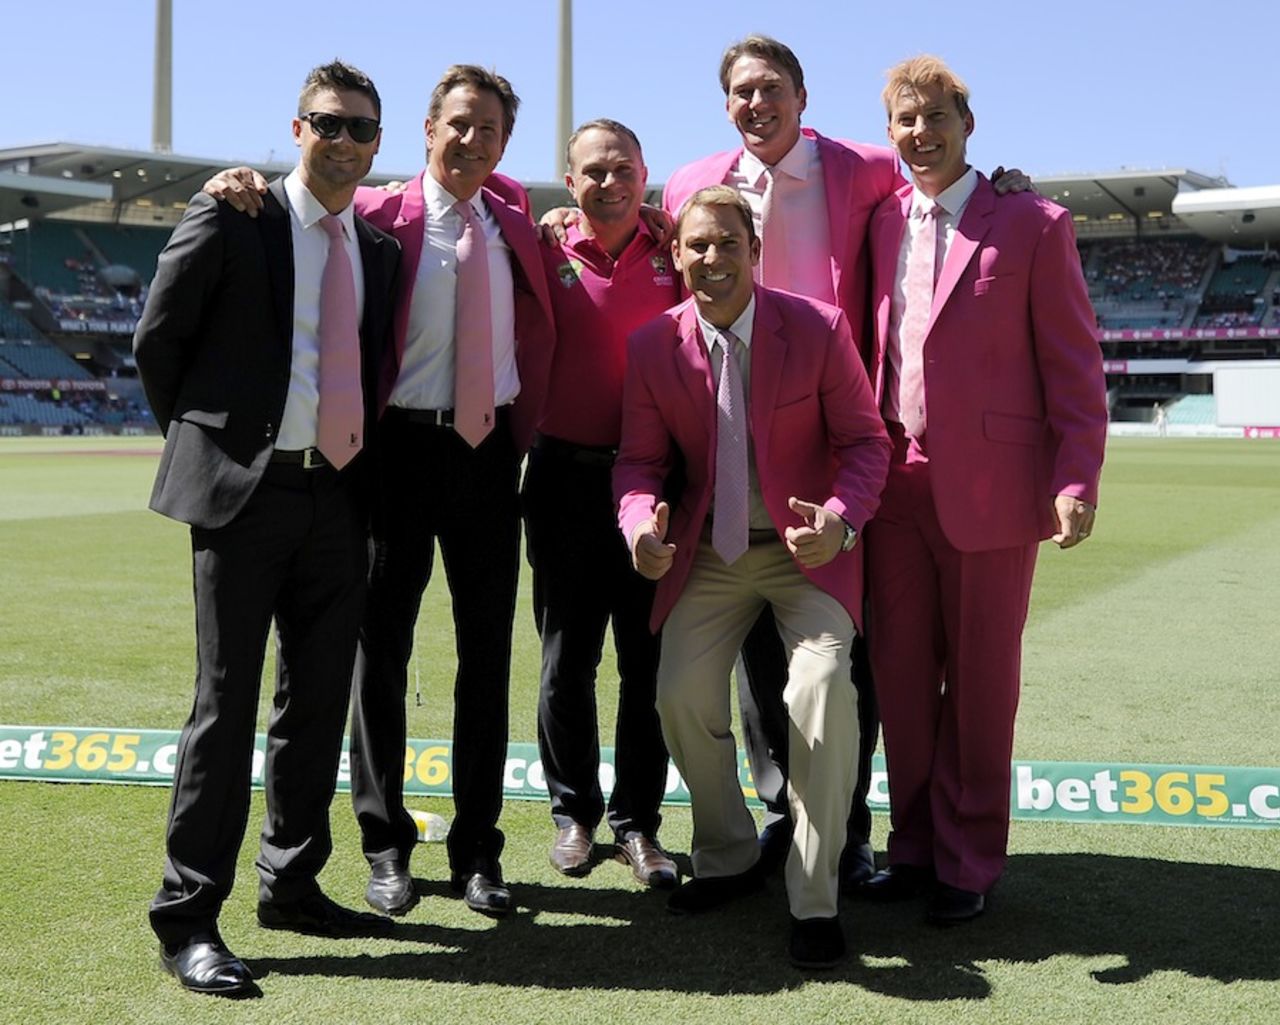 Michael Clarke, Mark Nicholas, Michael Slater, Shane Warne, Glenn McGrath and Brett Lee wear pink on Jane McGrath Day, Australia v India, 4th Test, Sydney, 3rd day, January 8, 2015